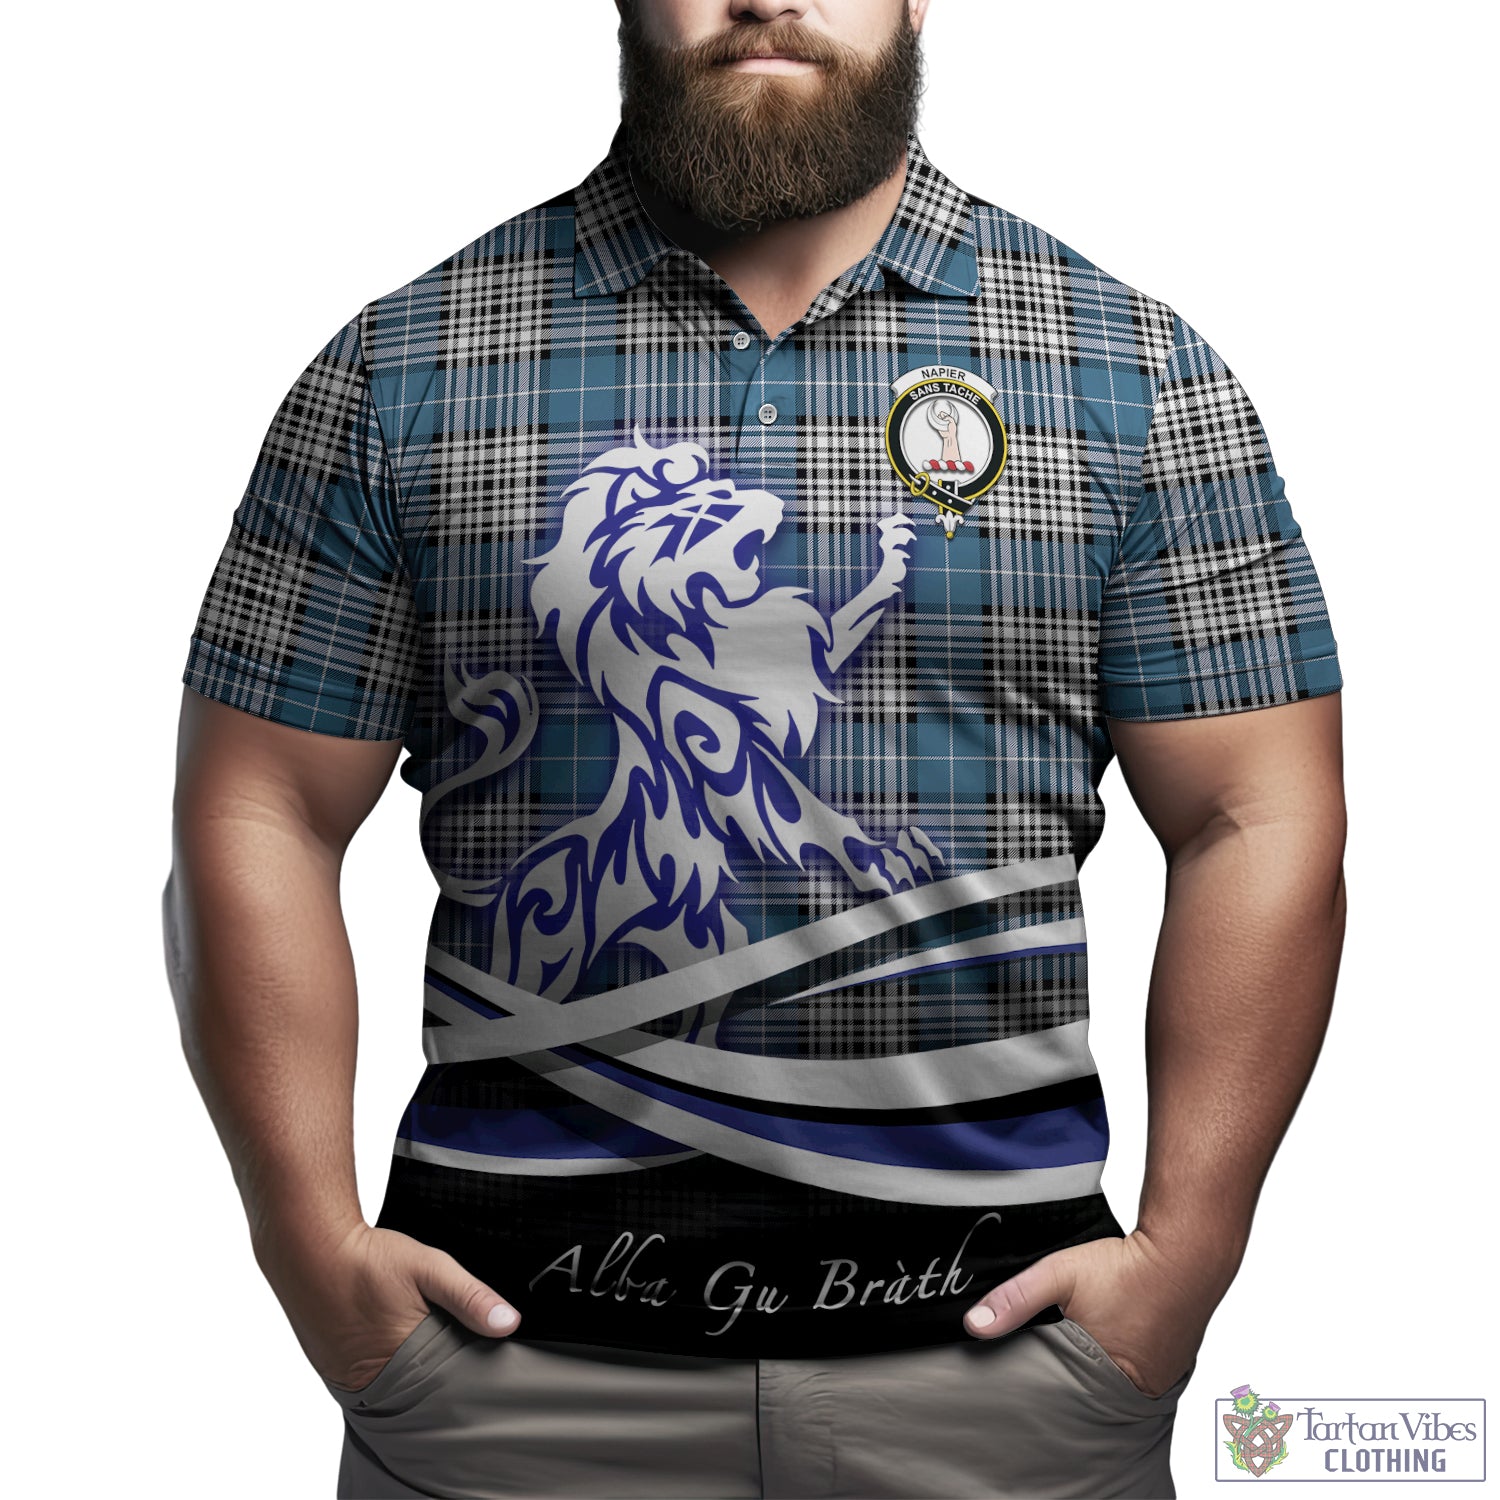 napier-modern-tartan-polo-shirt-with-alba-gu-brath-regal-lion-emblem